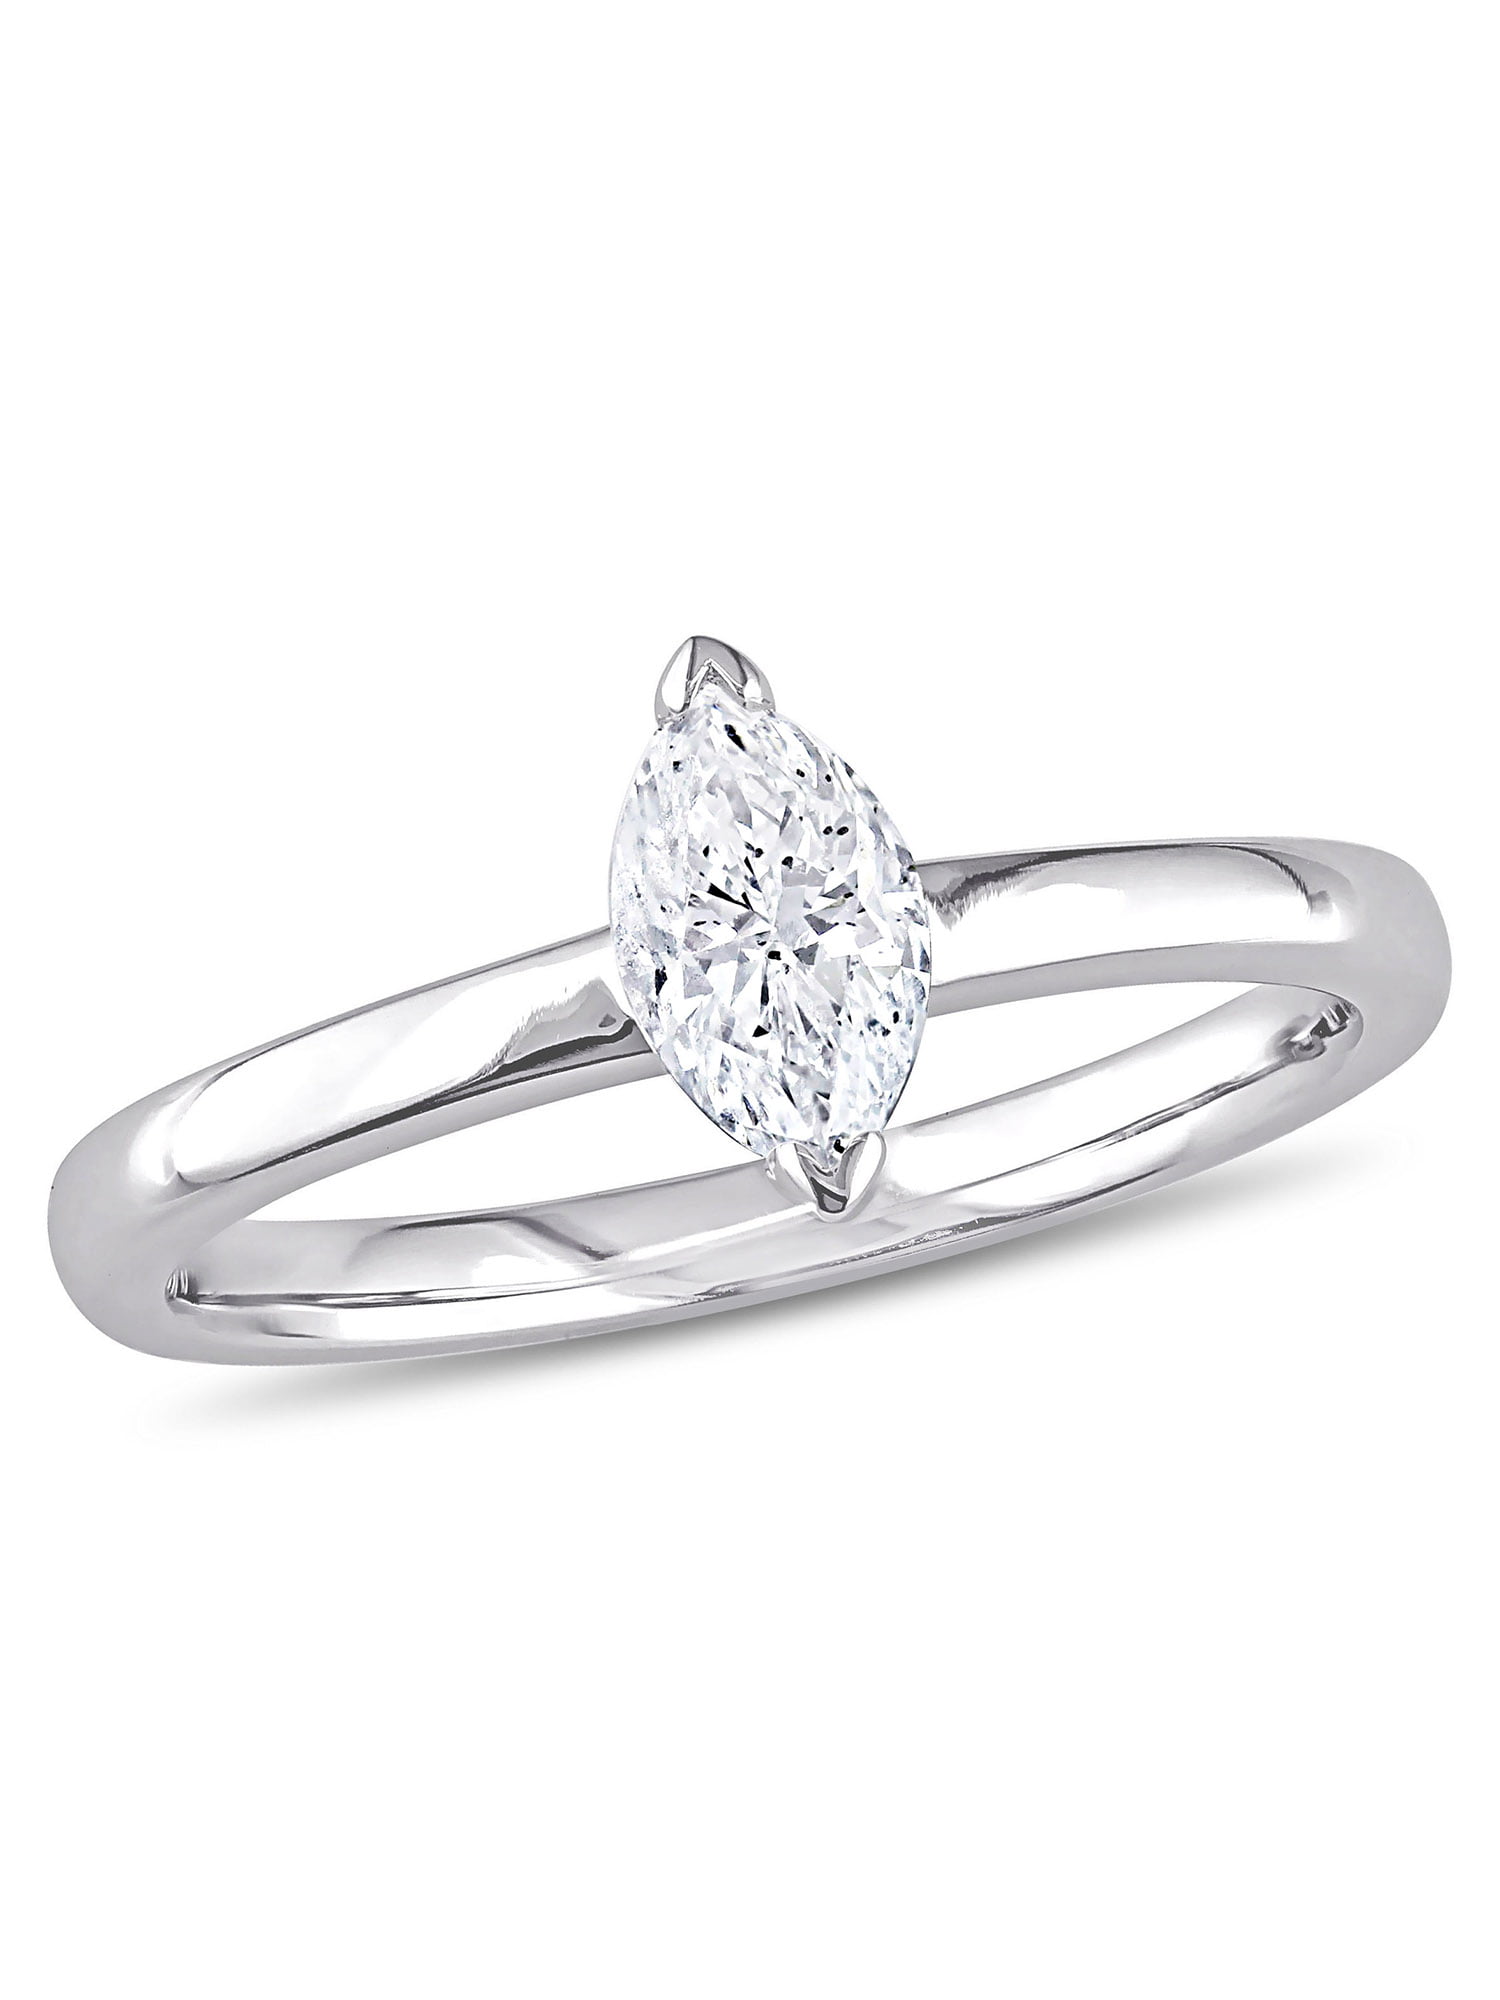 1Ct Marquise Cut Diamond Wedding Engagement Ring 14K Yellow Gold Finish 